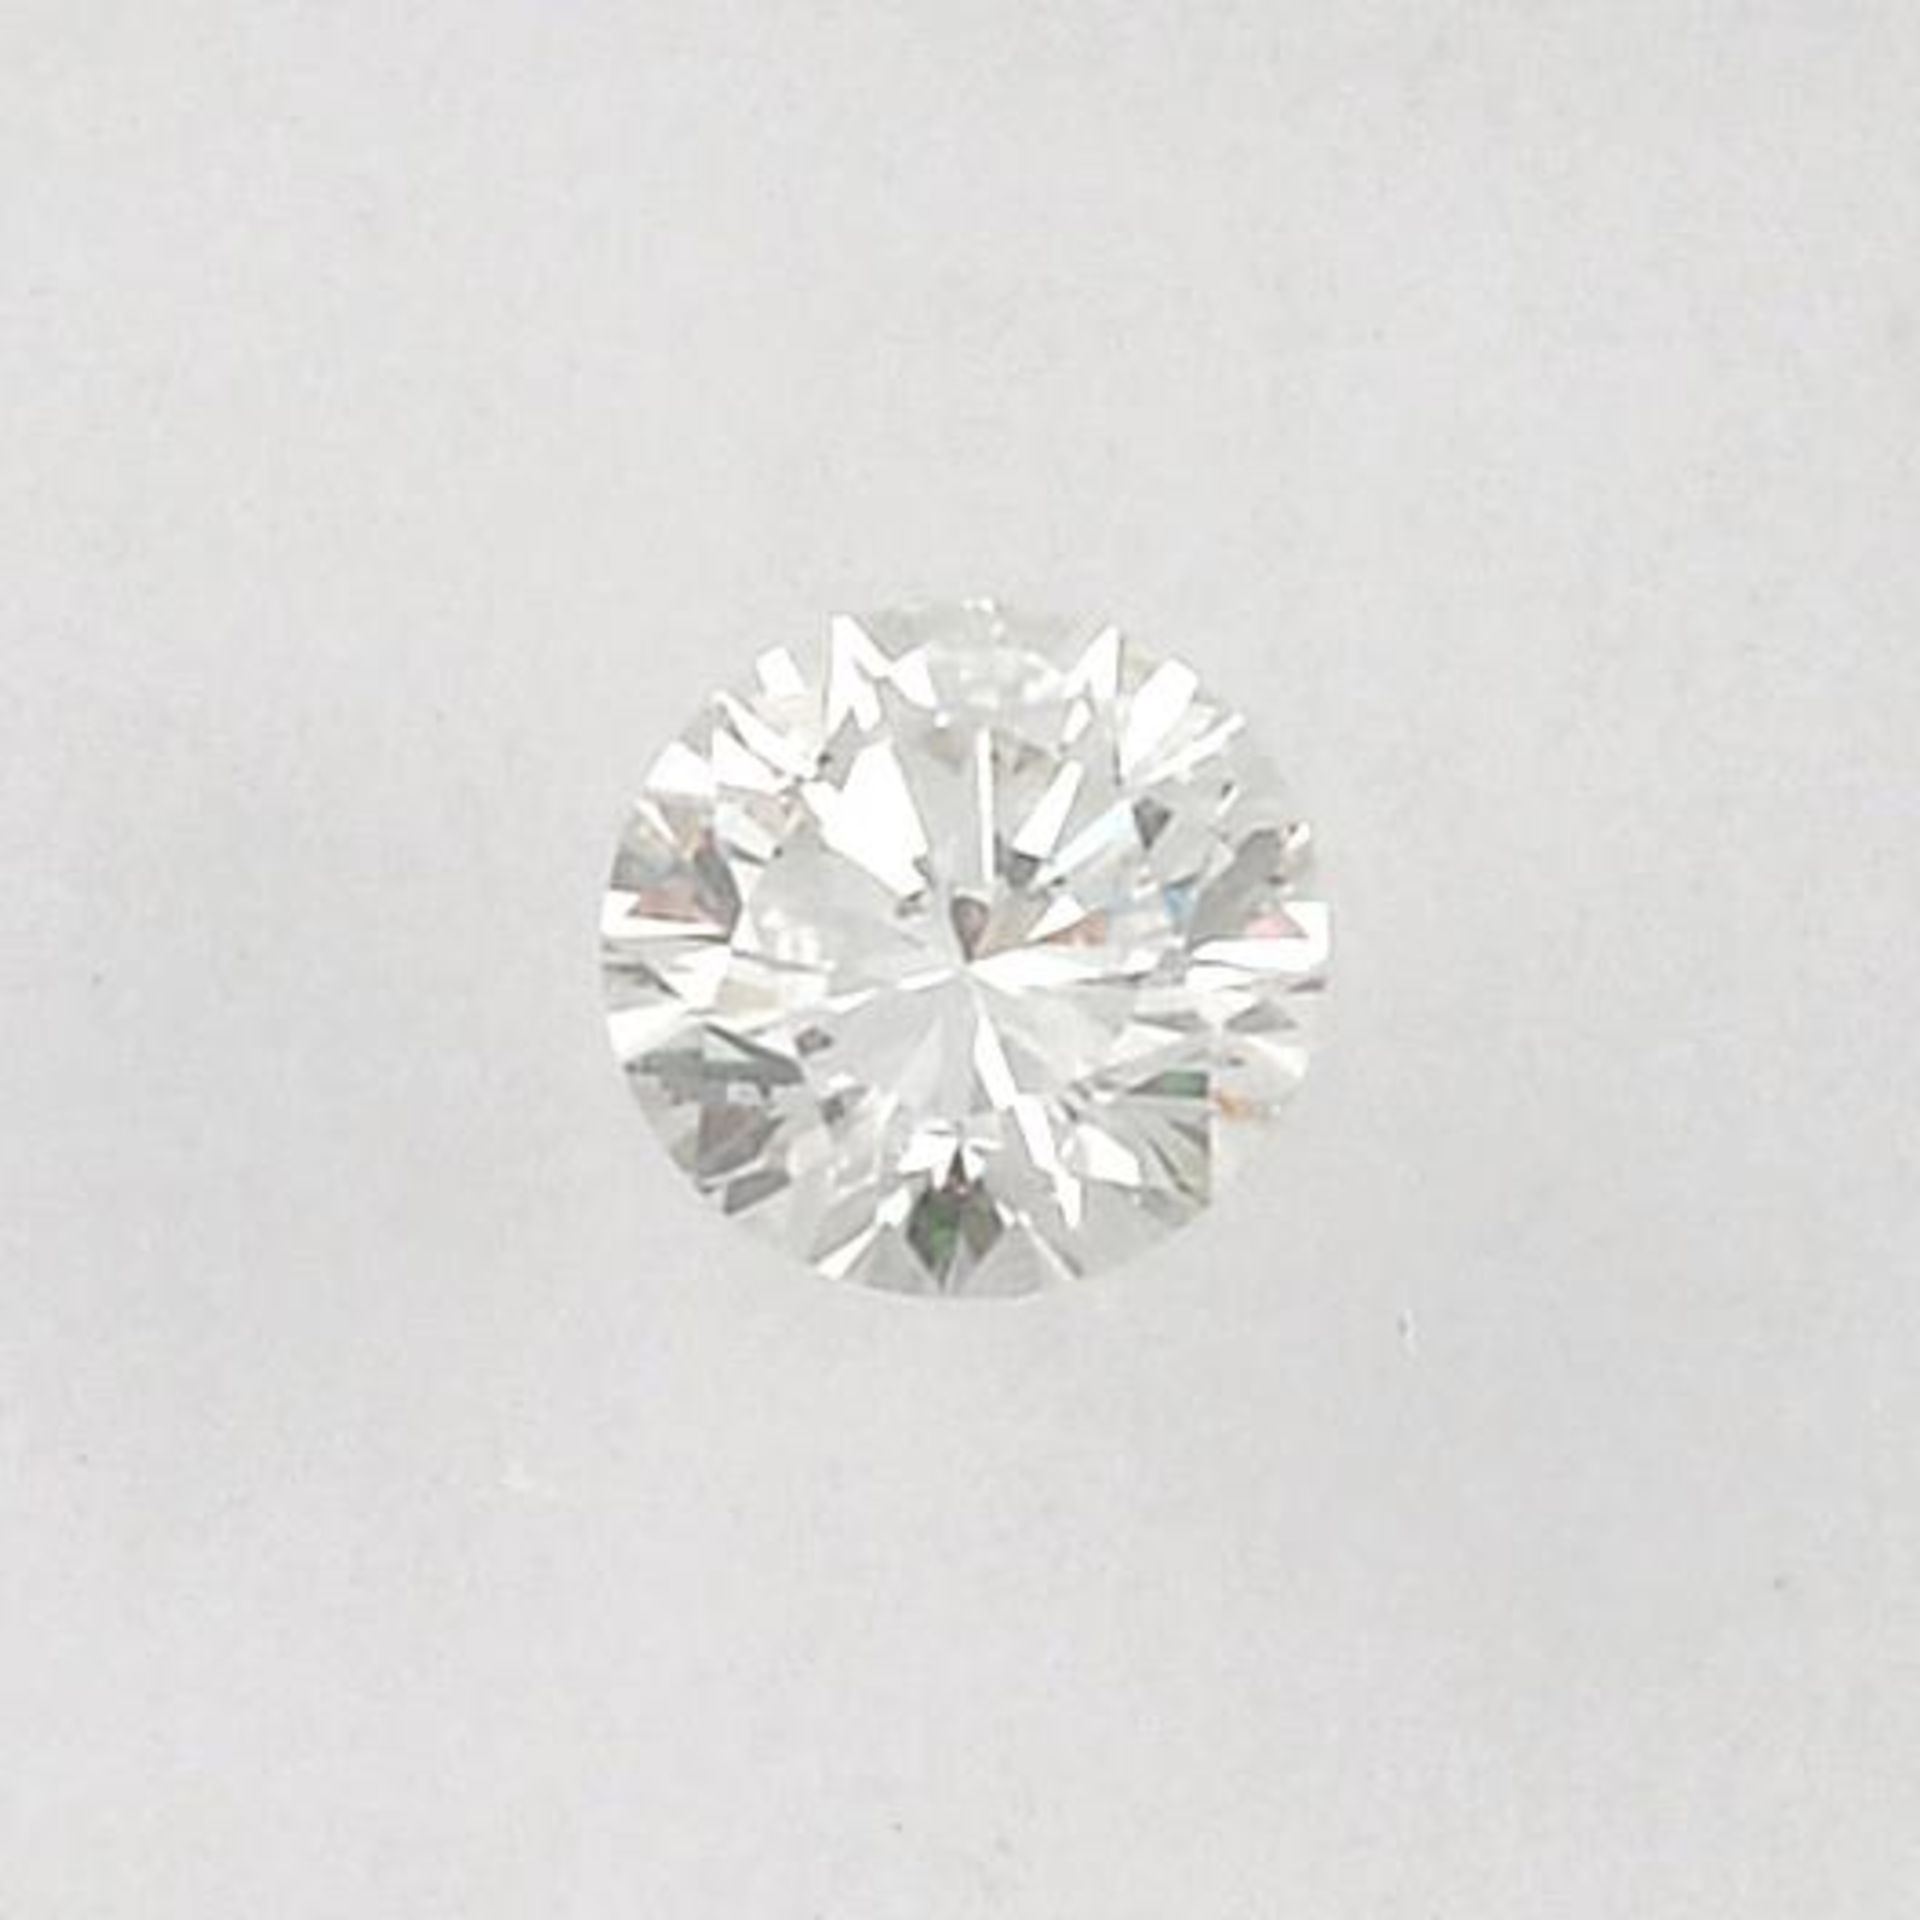 A brilliant cut diamond, weighing 0.22ct.